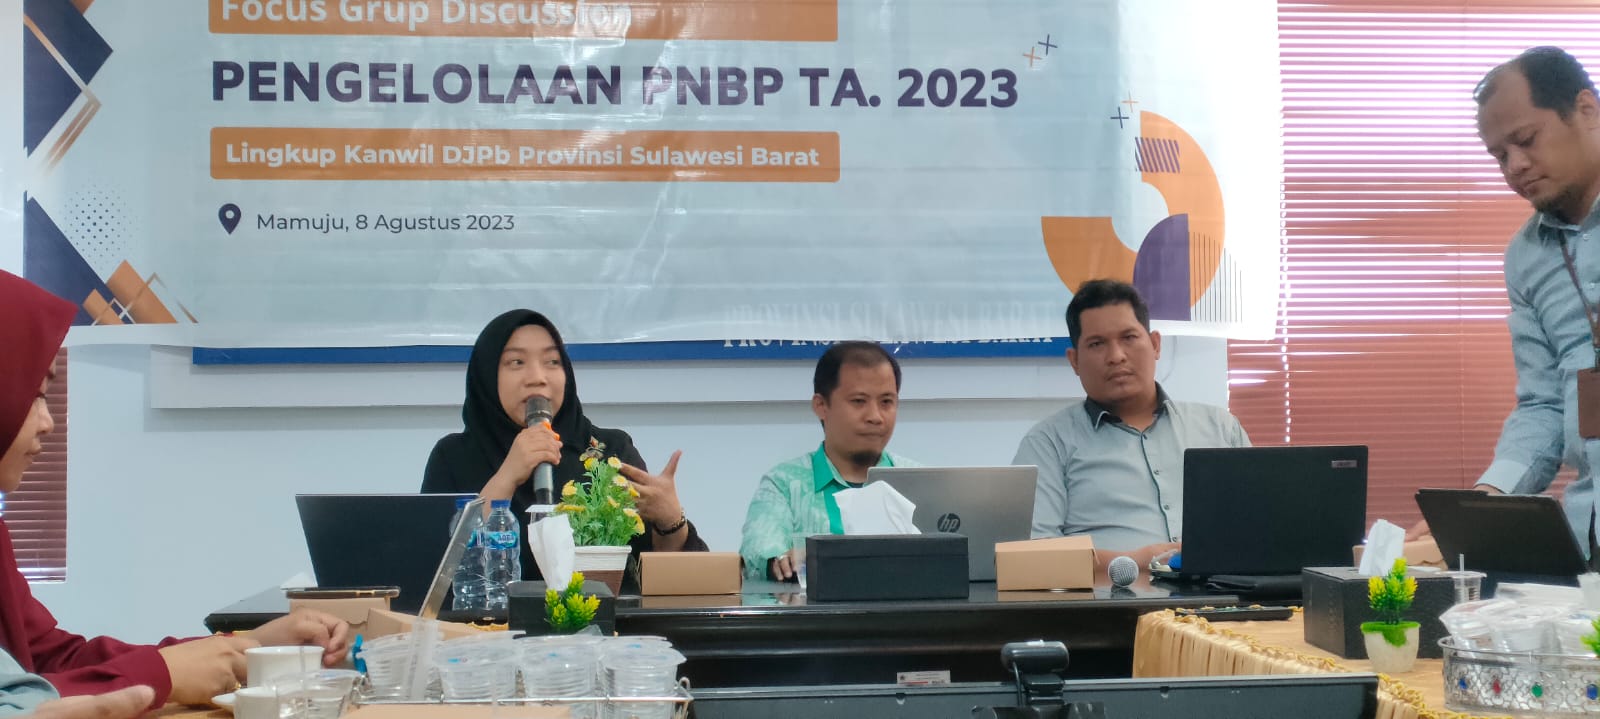 Kolaborasi dengan Kanwil DJPb Sulbar, KPKNL Mamuju Gali Potensi PNBP dari Pengelolaan BMN